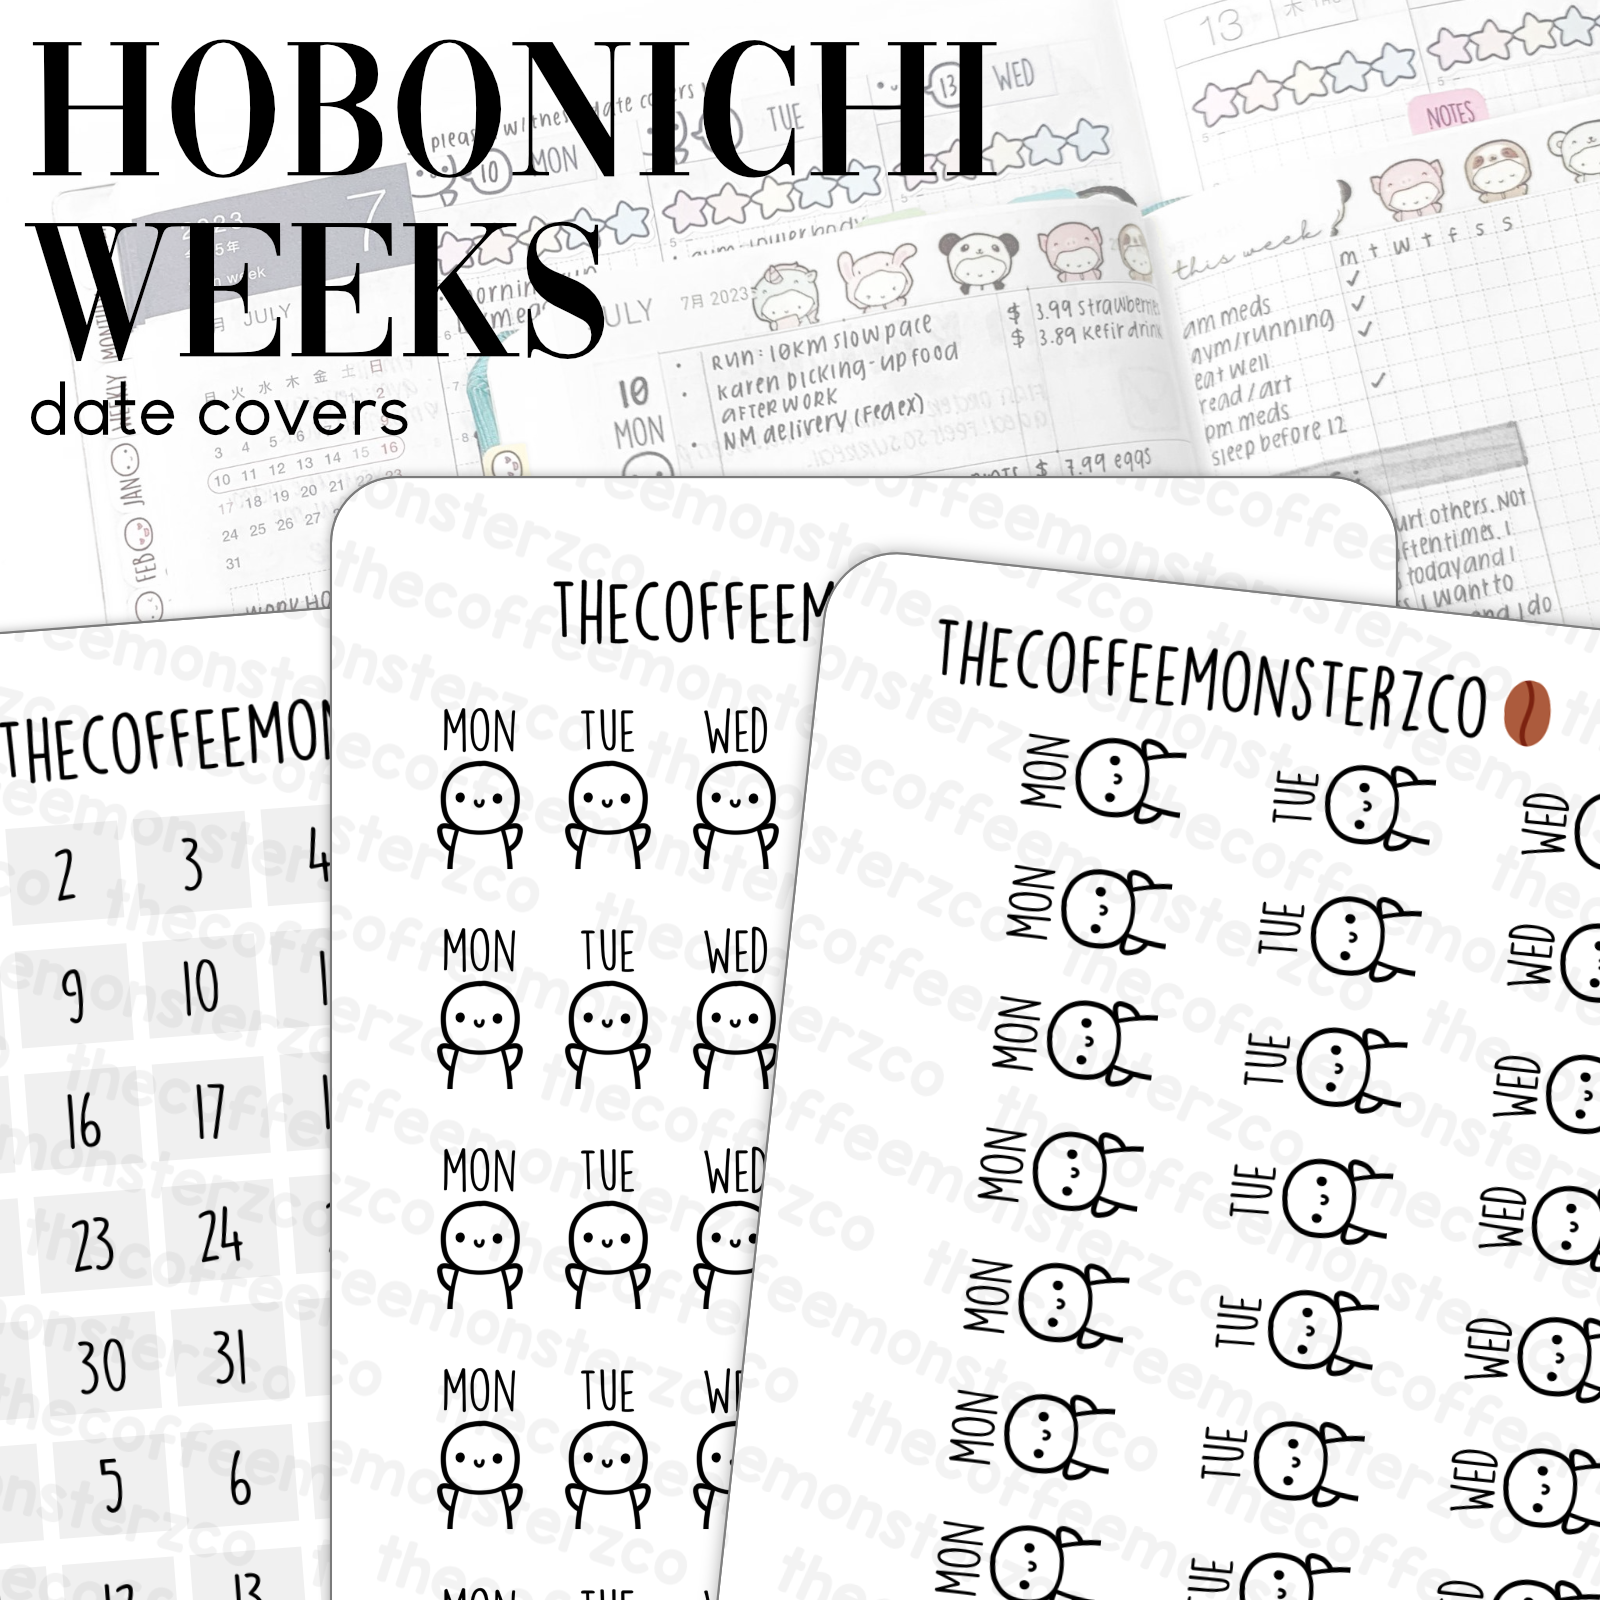 Hobonichi a6 cover - Hobonichi weeks cover - hobonichi cousin